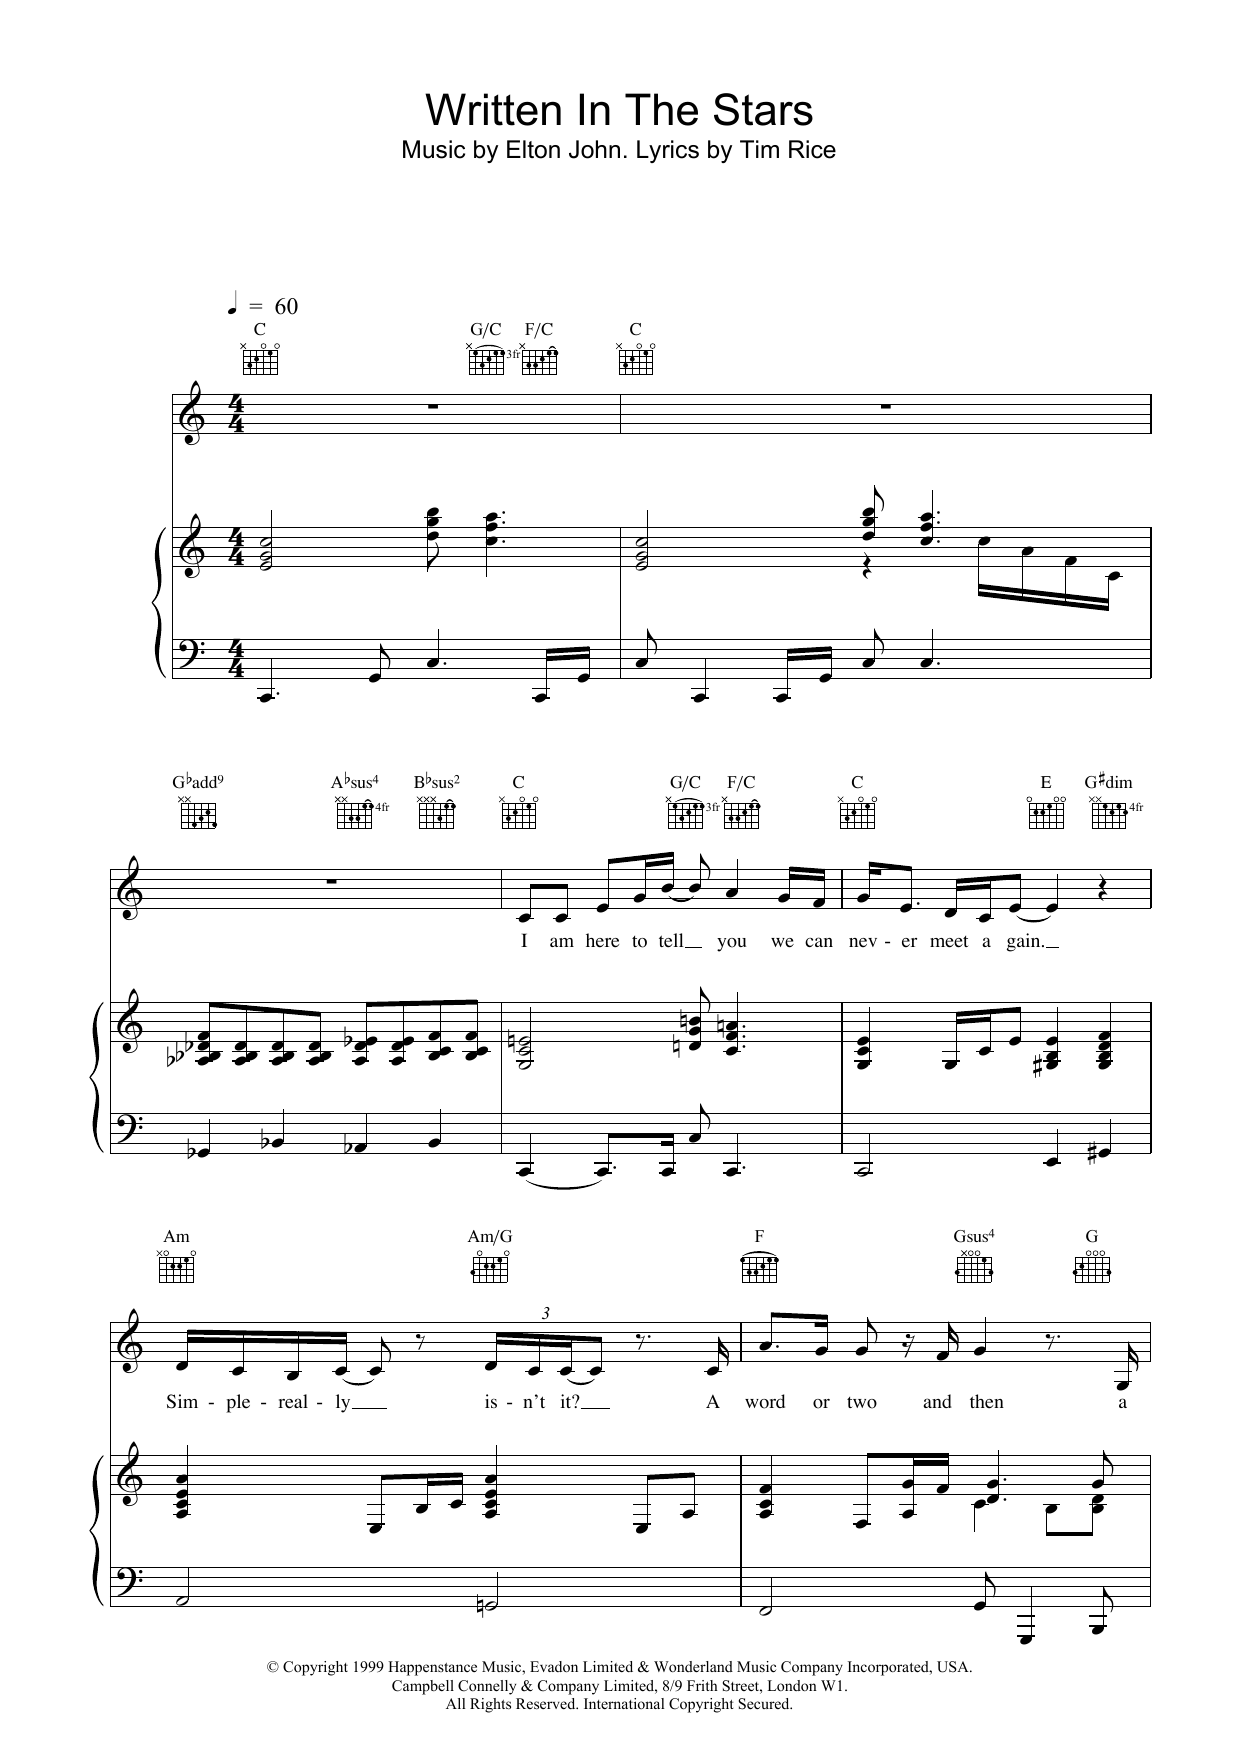 Download Elton John & LeAnn Rimes Written In The Stars Sheet Music and learn how to play Trombone PDF digital score in minutes